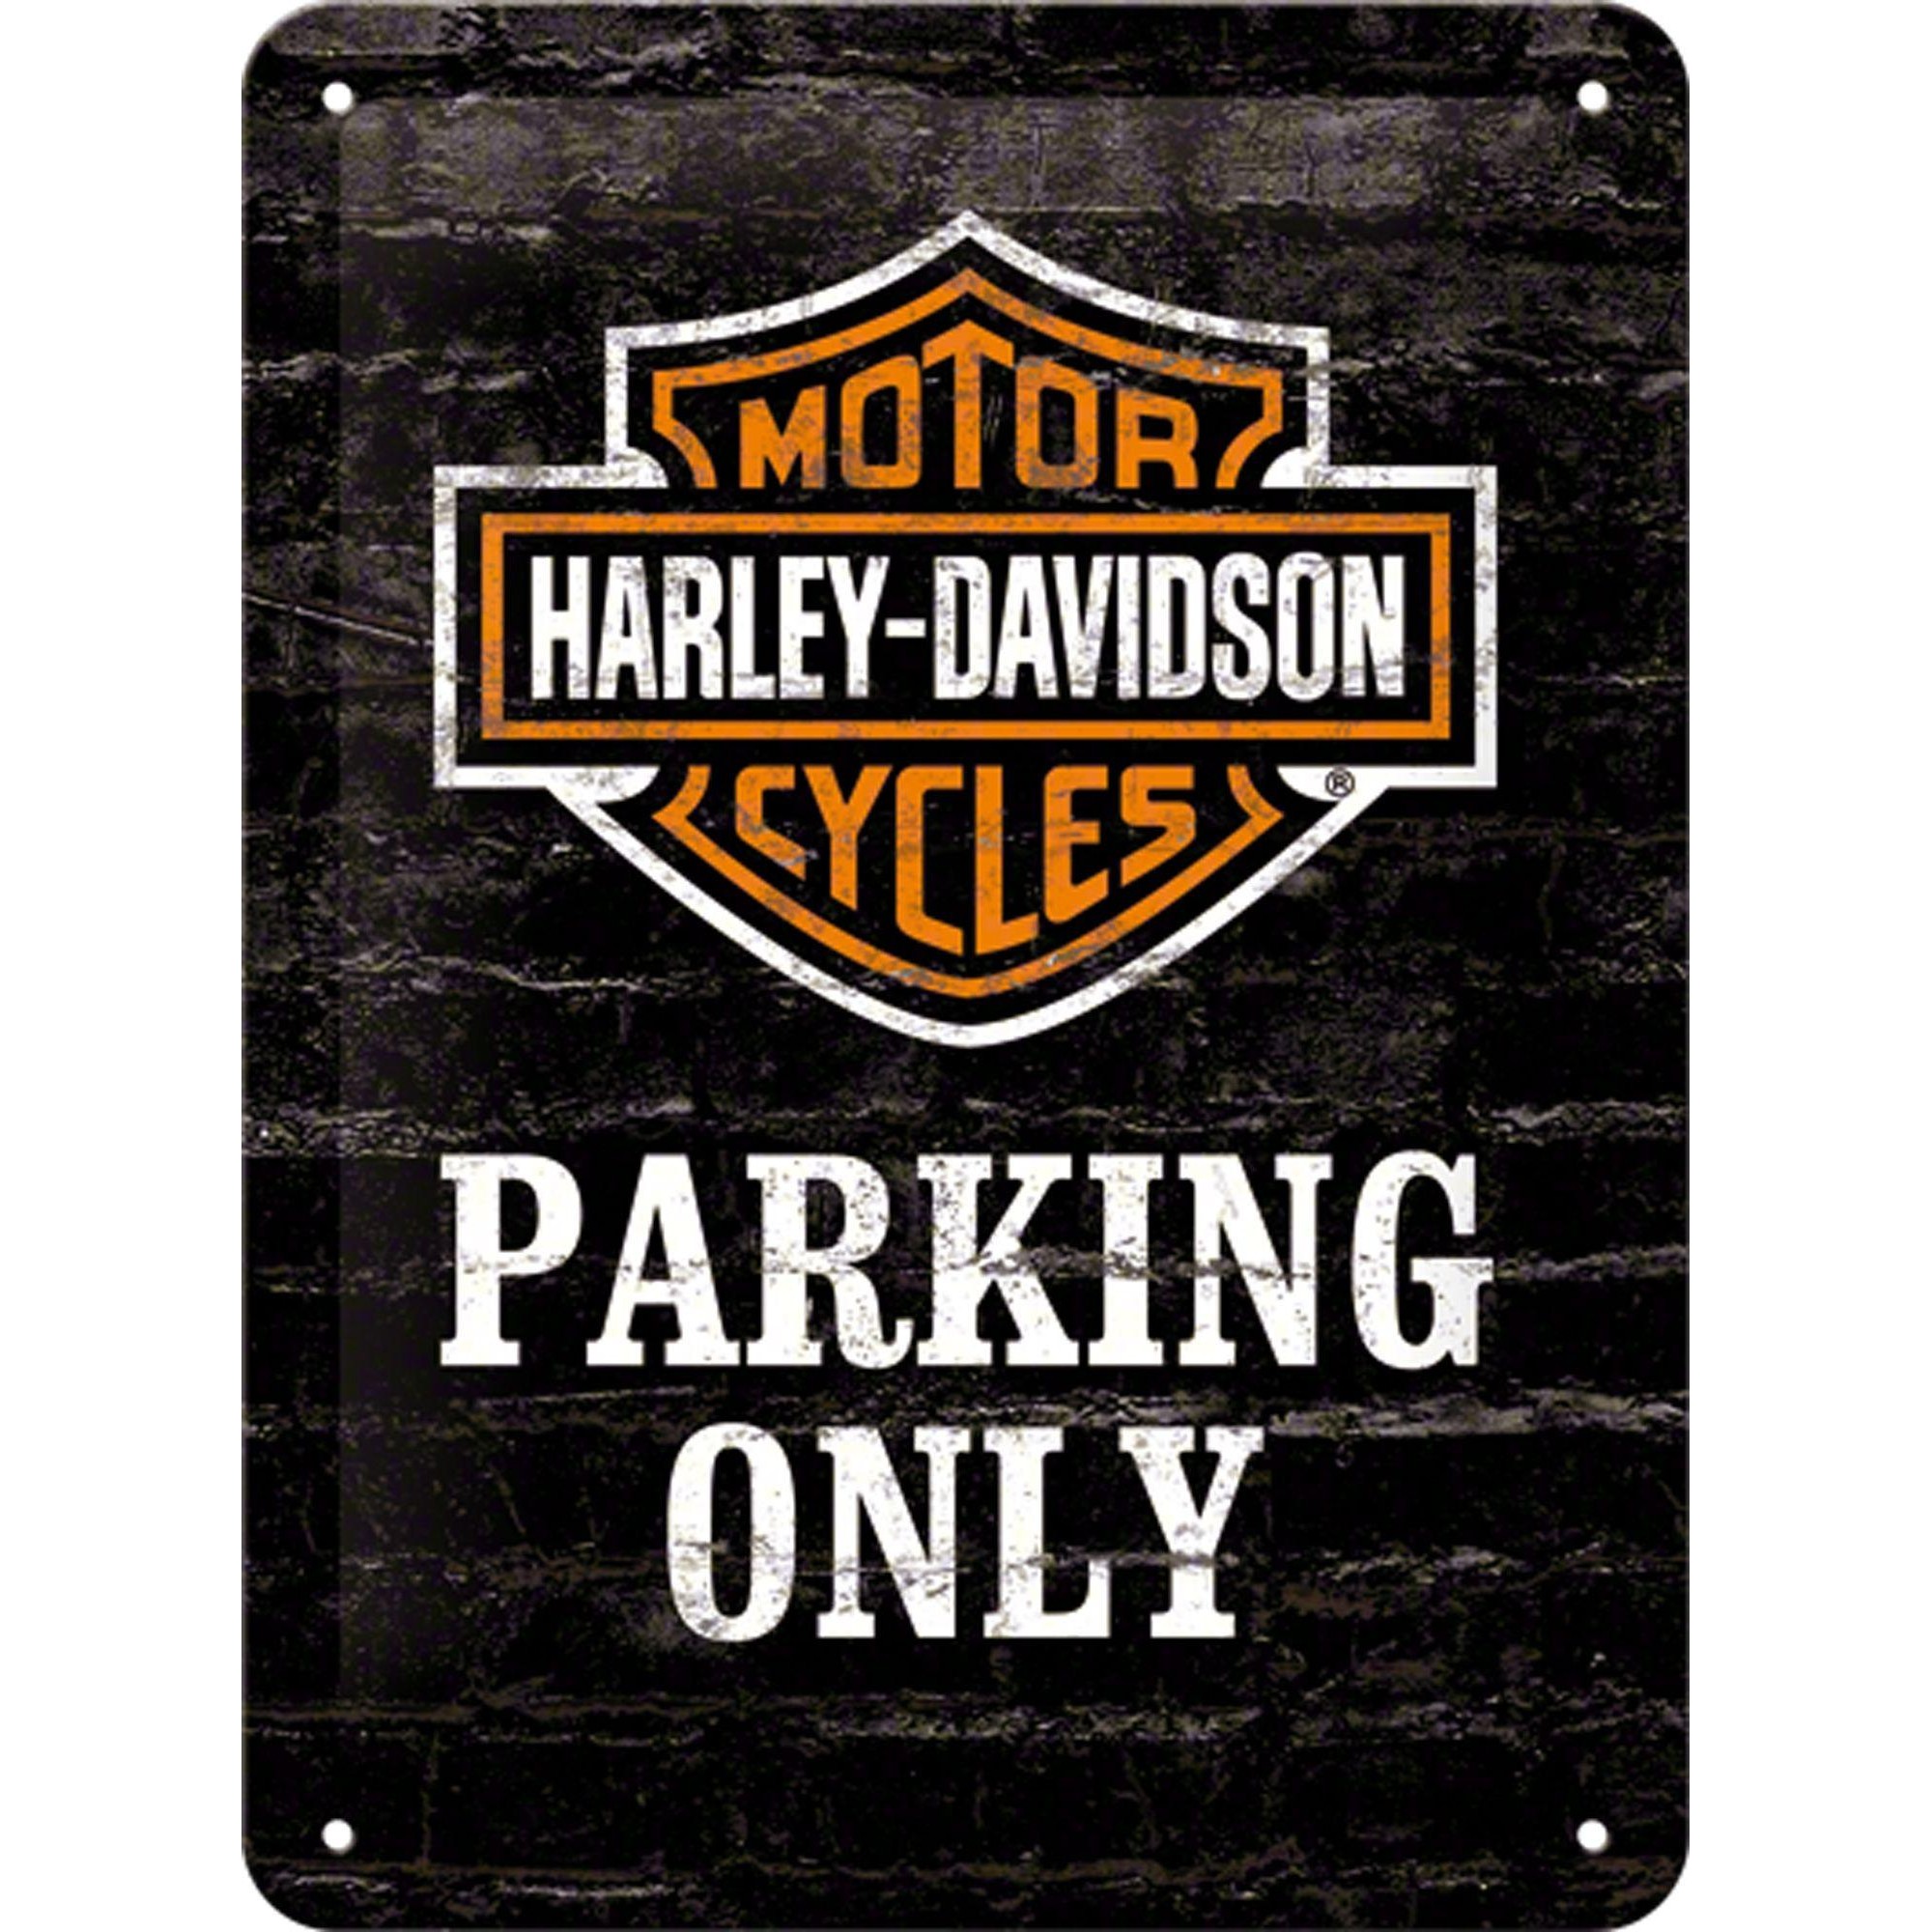 Blaszany szyld dla motocyklisty HARLEY DAVIDSON PARKING ONLY 